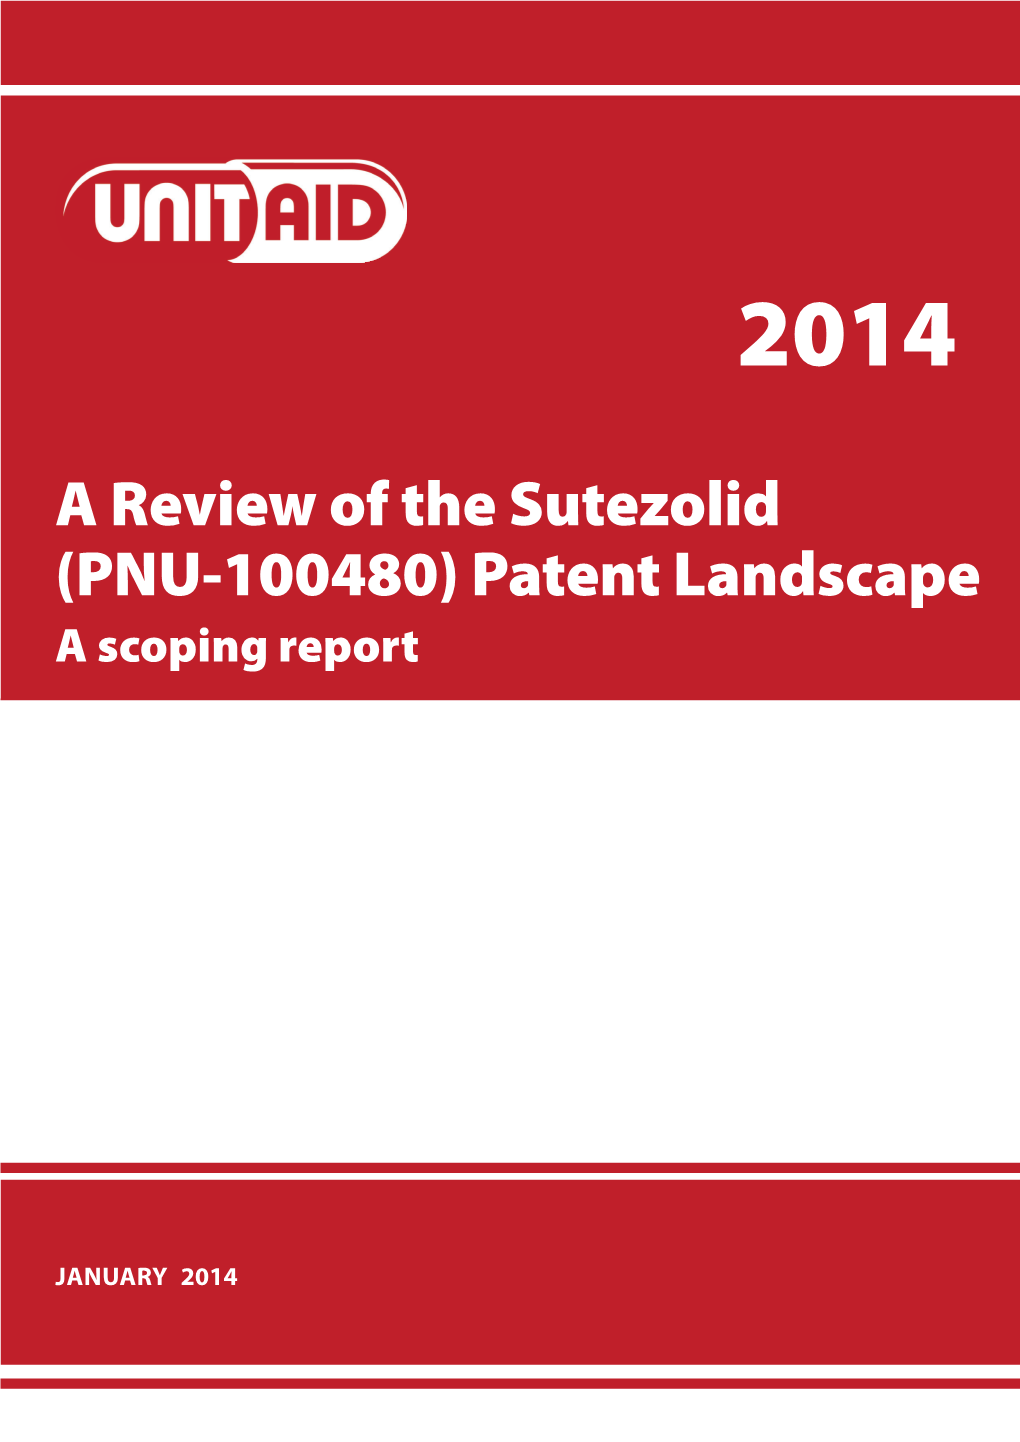 A Review of the Sutezolid (PNU-100480) Patent Landscape a Scoping Report